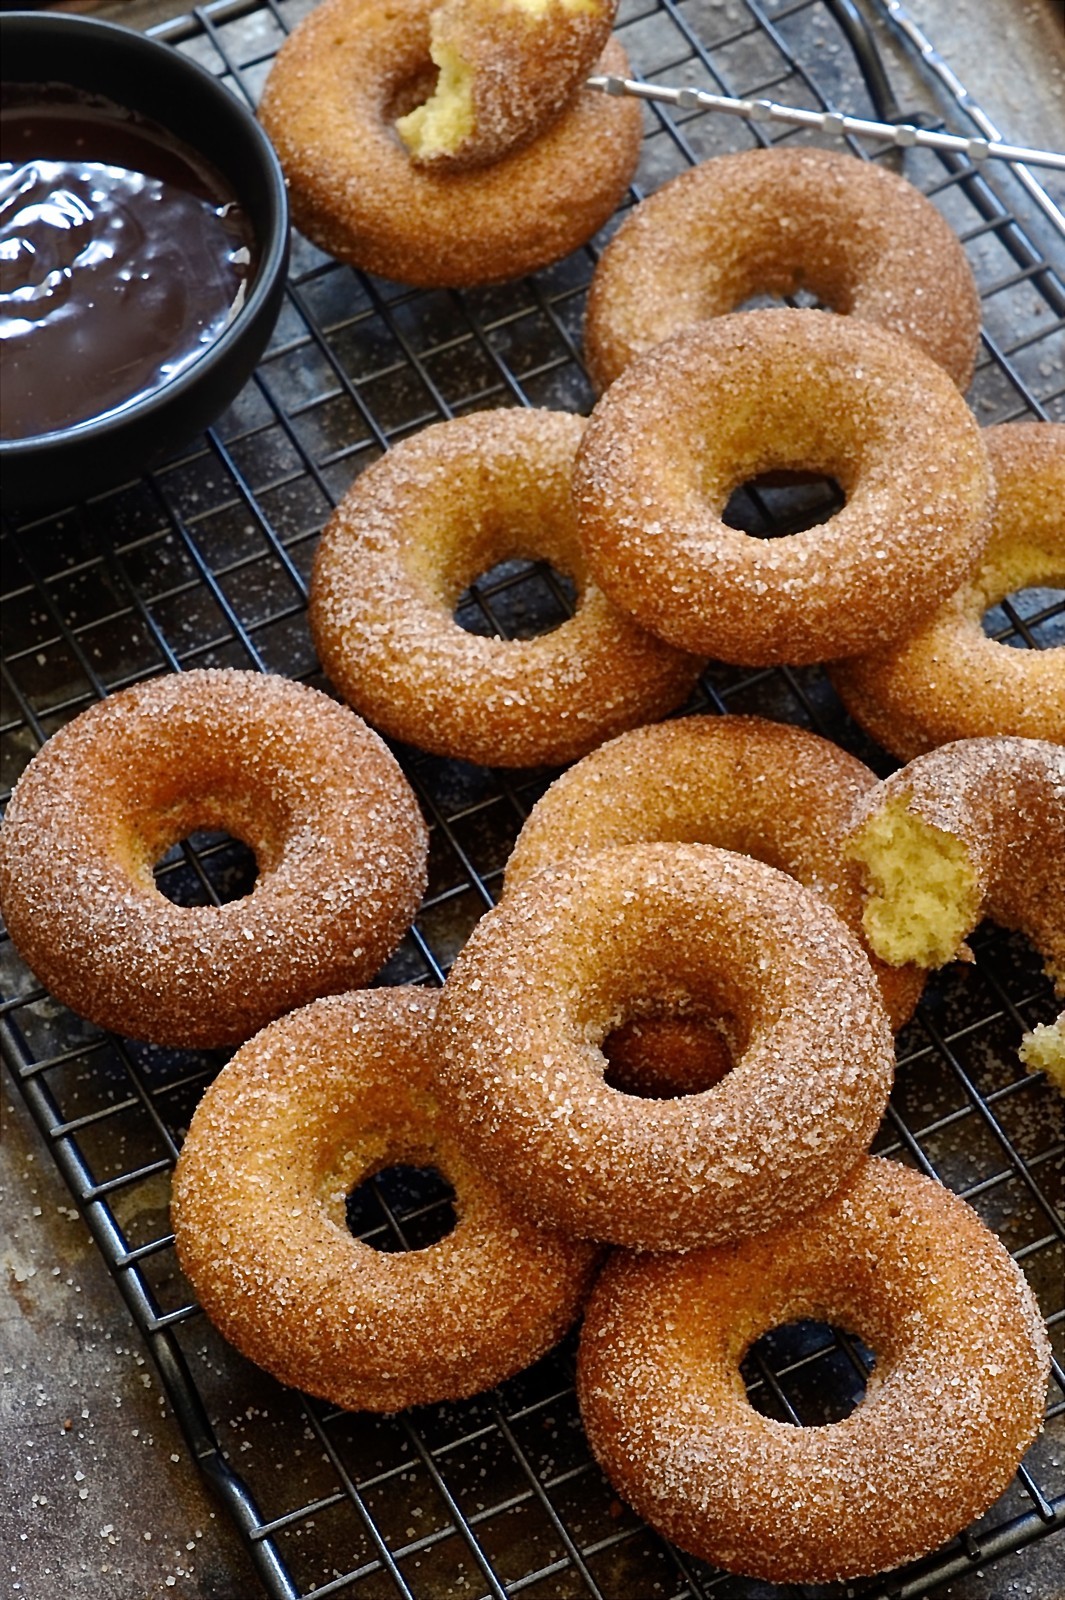 Baked donuts with cinnamon-chocolate ganache | Bibbyskitchen recipes